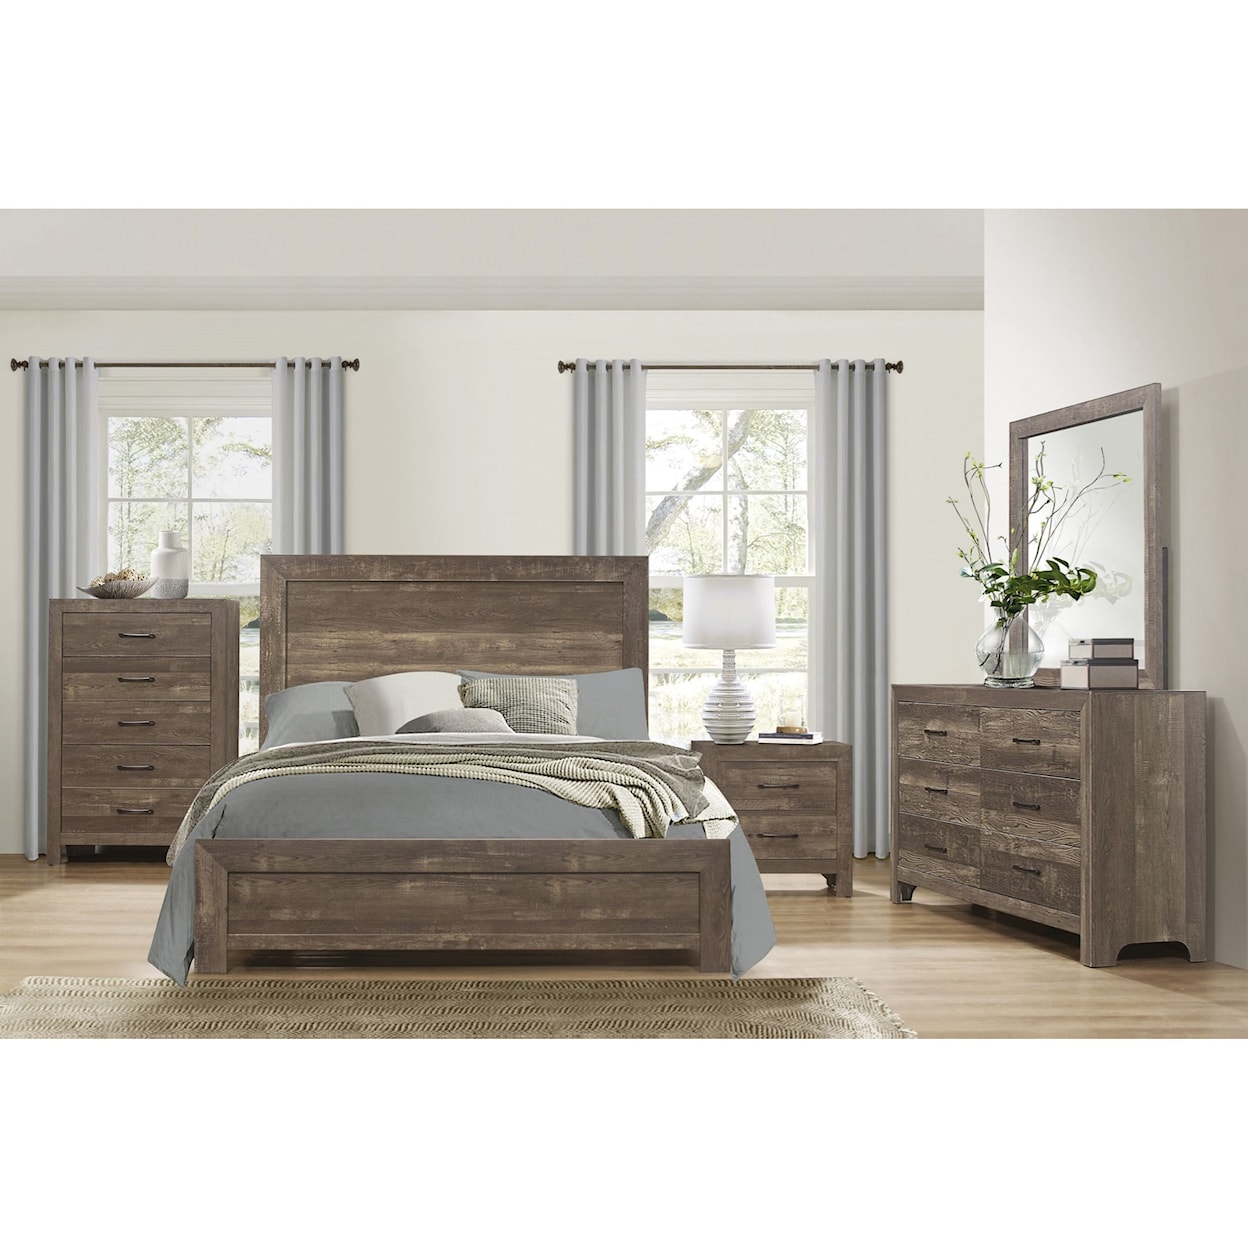 Homelegance Furniture Corbin California King Bedroom Group